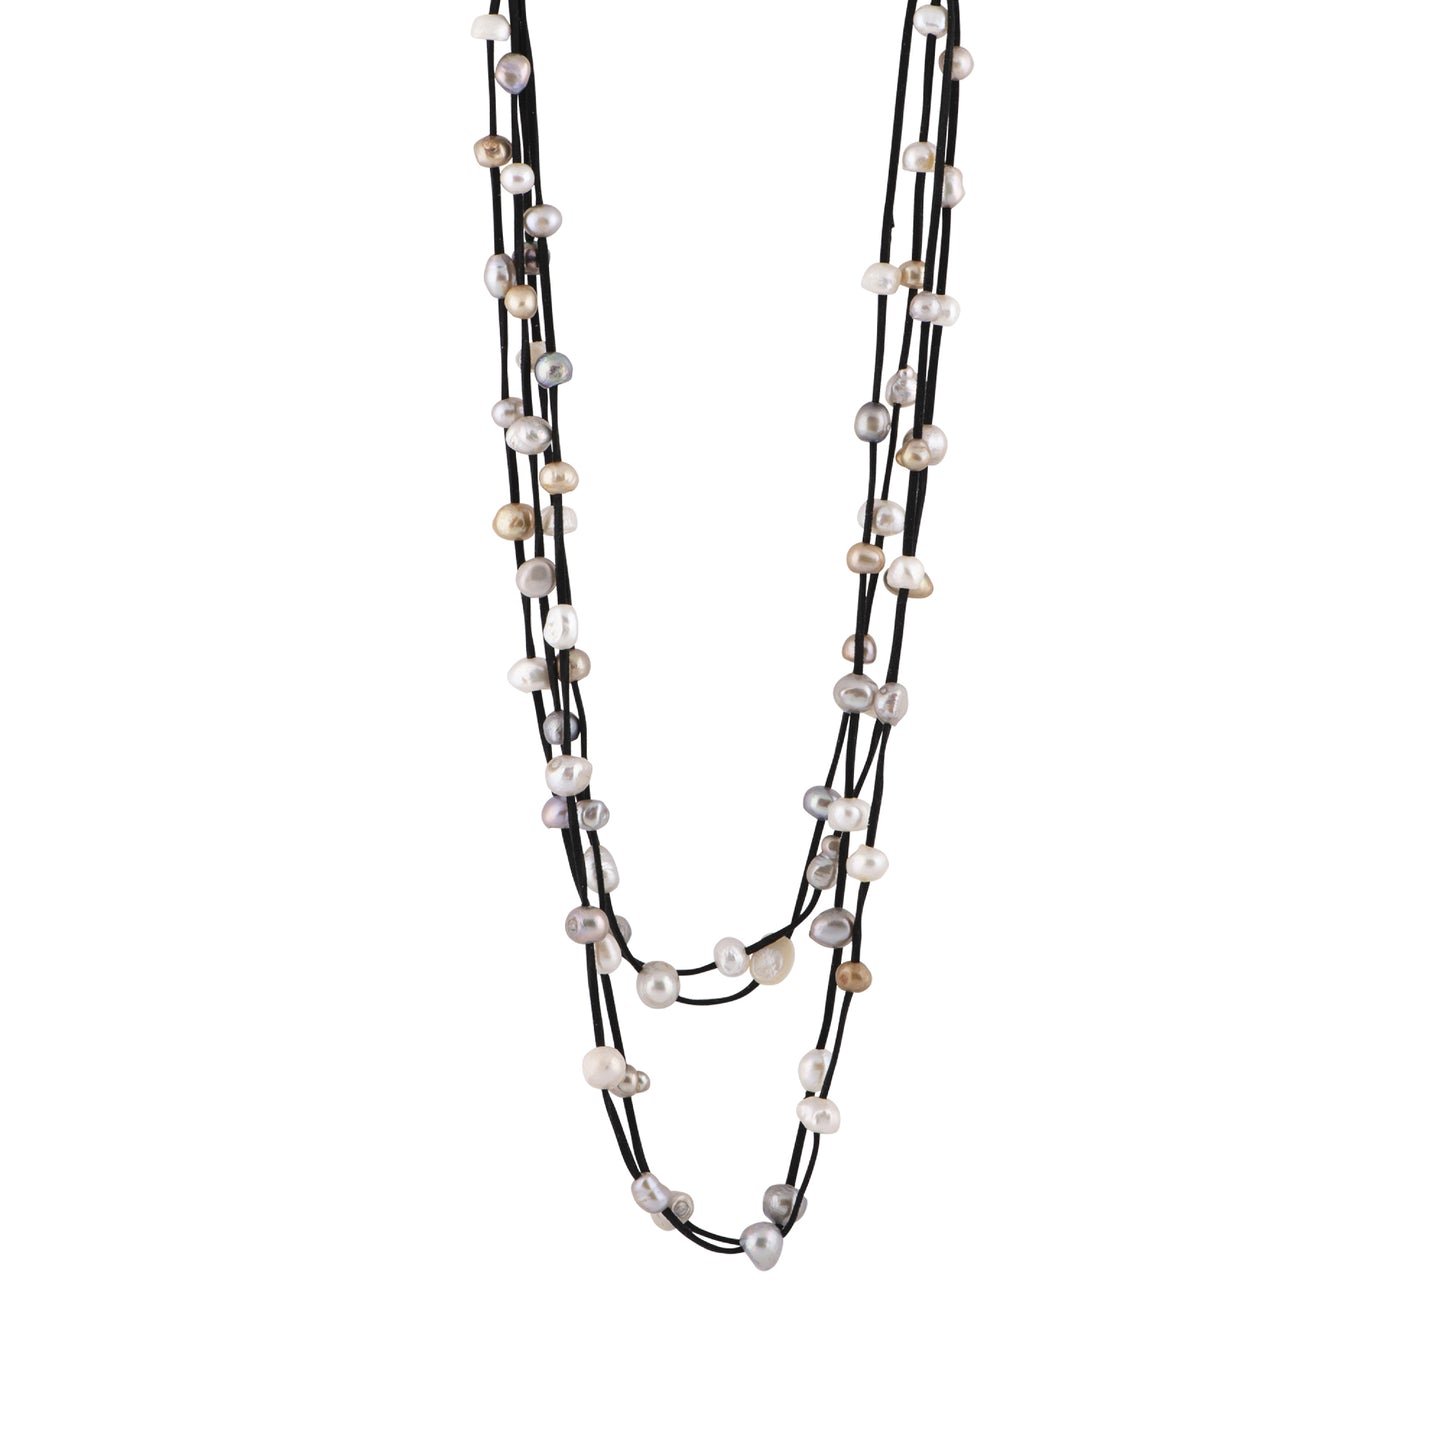 Julie - Multi strand suede necklace with pearls (Black suede, multicolor pearls)